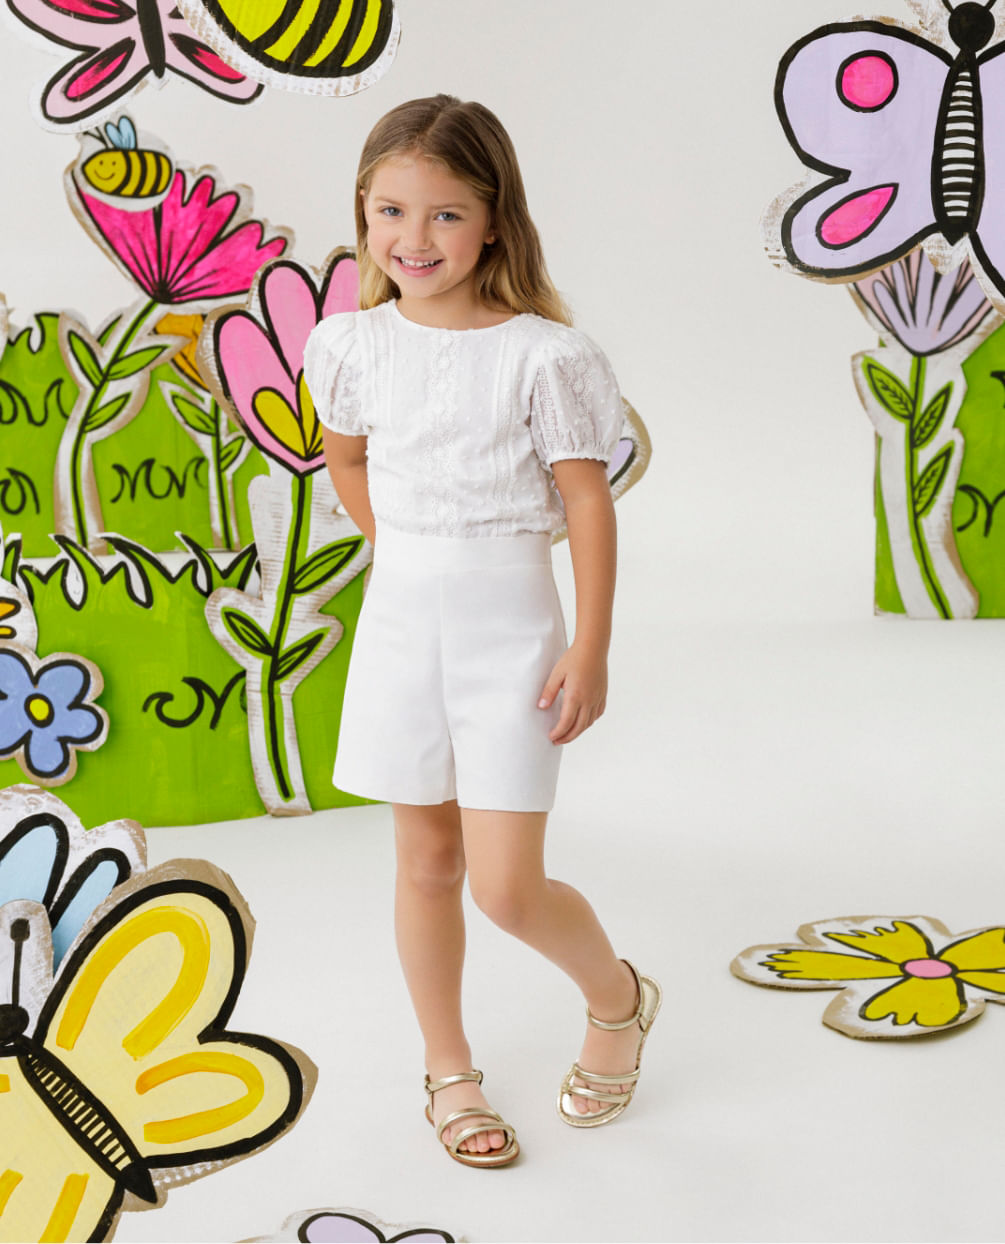 Foto de modelo niña usando blusa manga corta color blanco, short blanco y sandalias planas color dorado